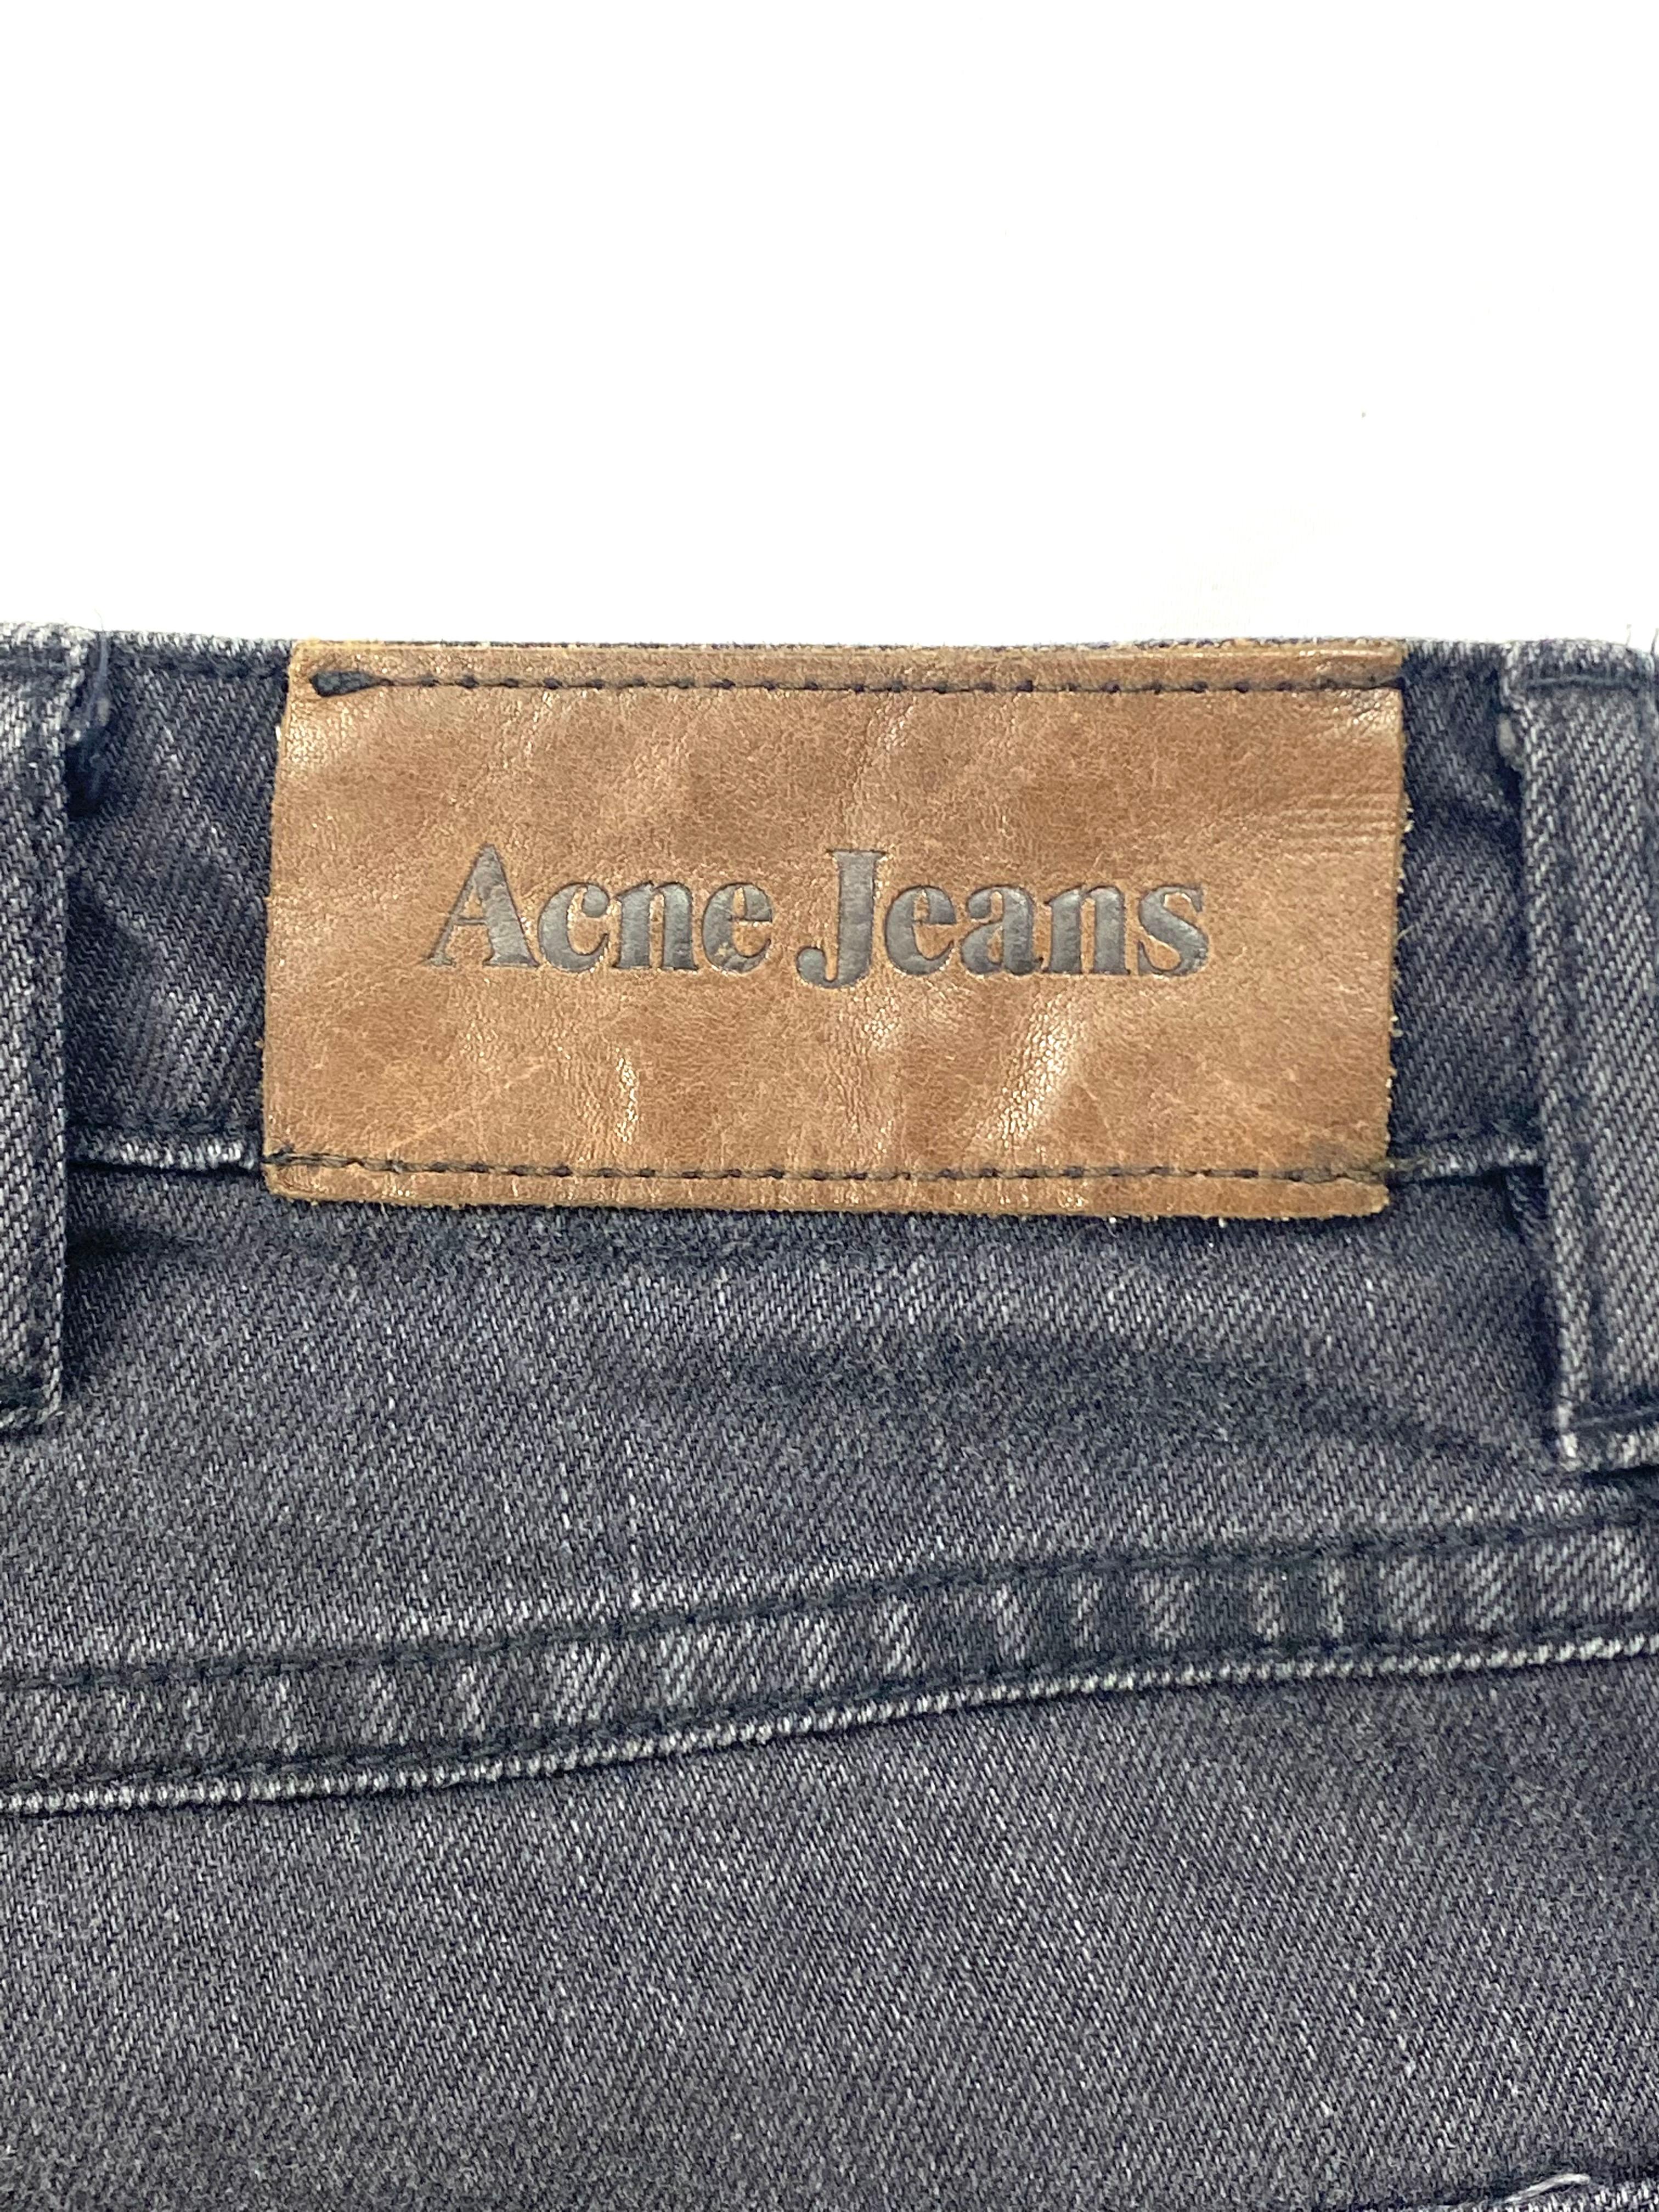 Black Acne Jeans Grey Skinny Denim Pants, Size 29/ 34 For Sale